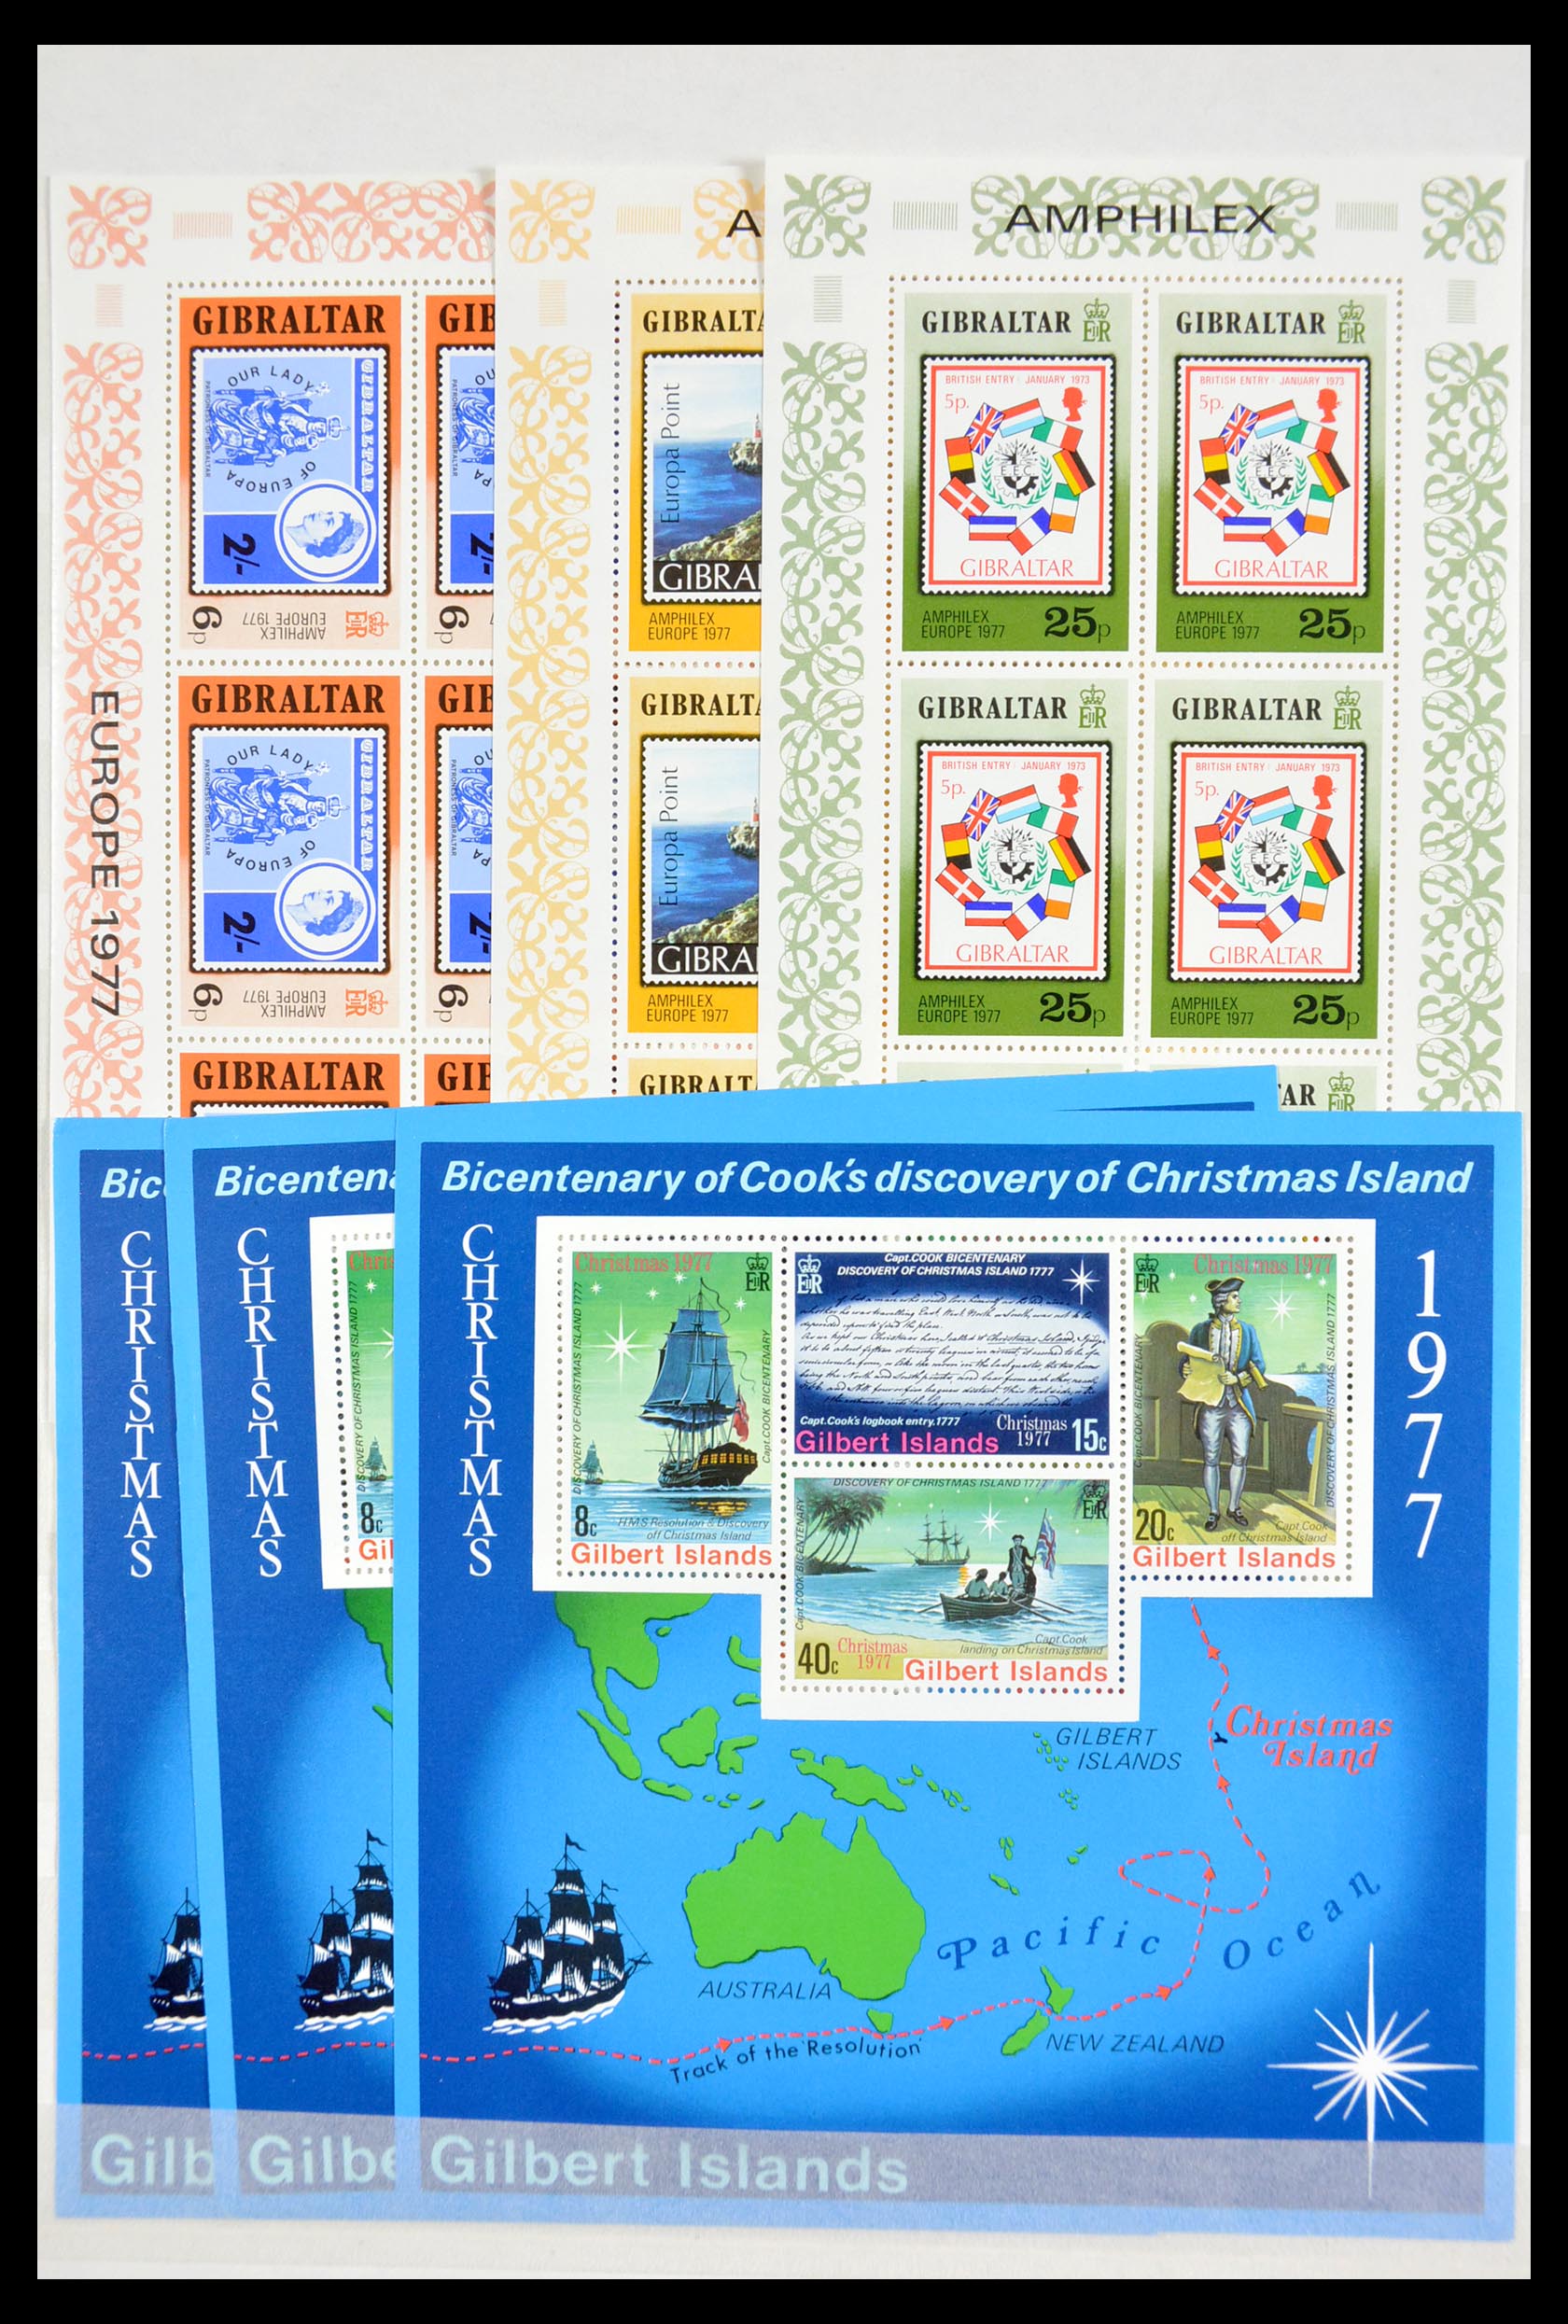 29584 109 - 29584 World souvenir sheets 1980-2011.